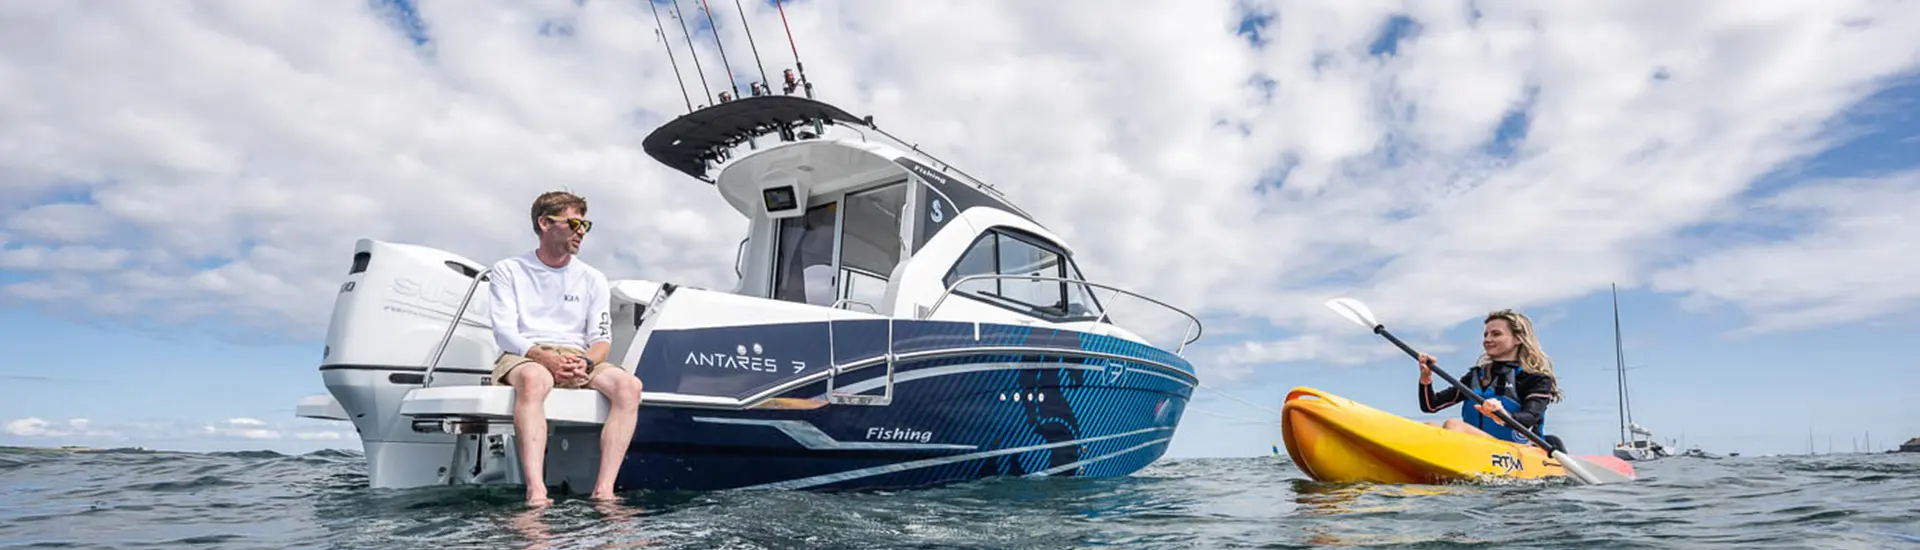 antares7-FISHING-kaufen